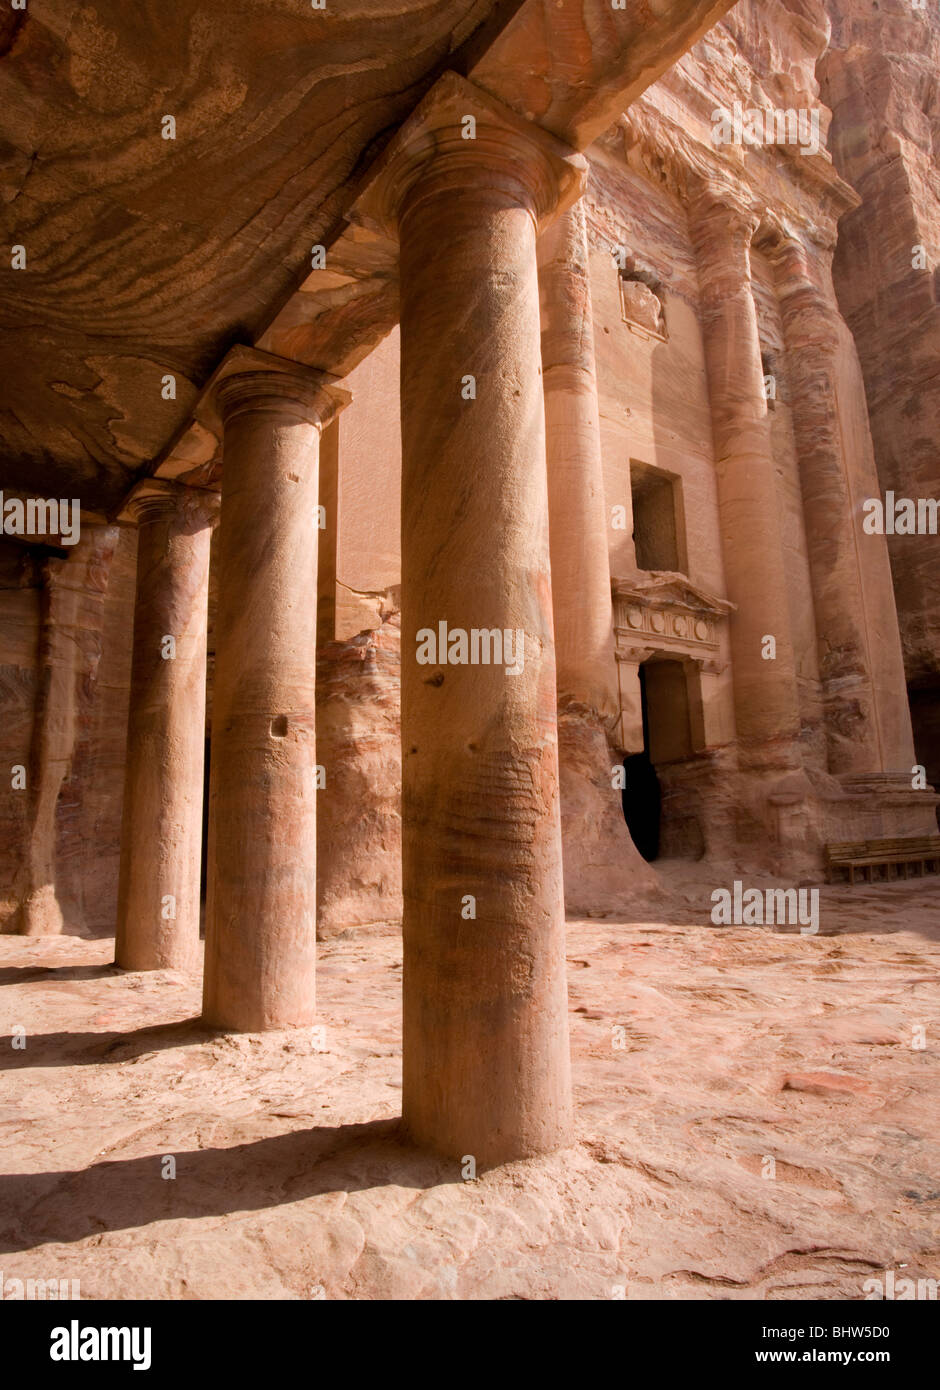 Urn tomb at the ancient red rose city of Petra in Wadi Musa, Jordan. Stock Photo